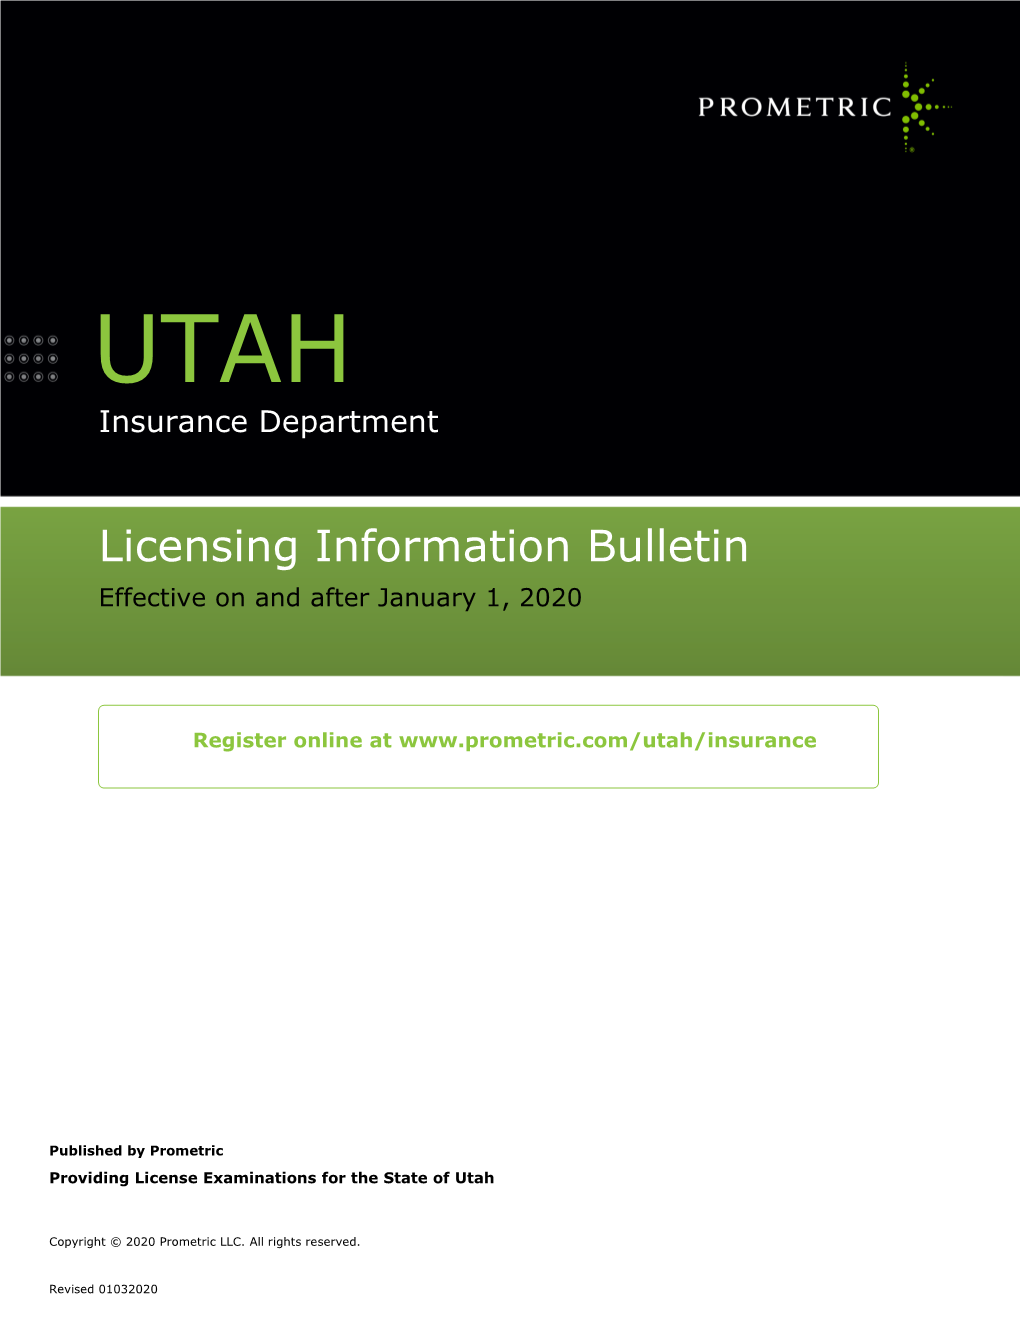 Utah Insurance Licensing Information Bulletin